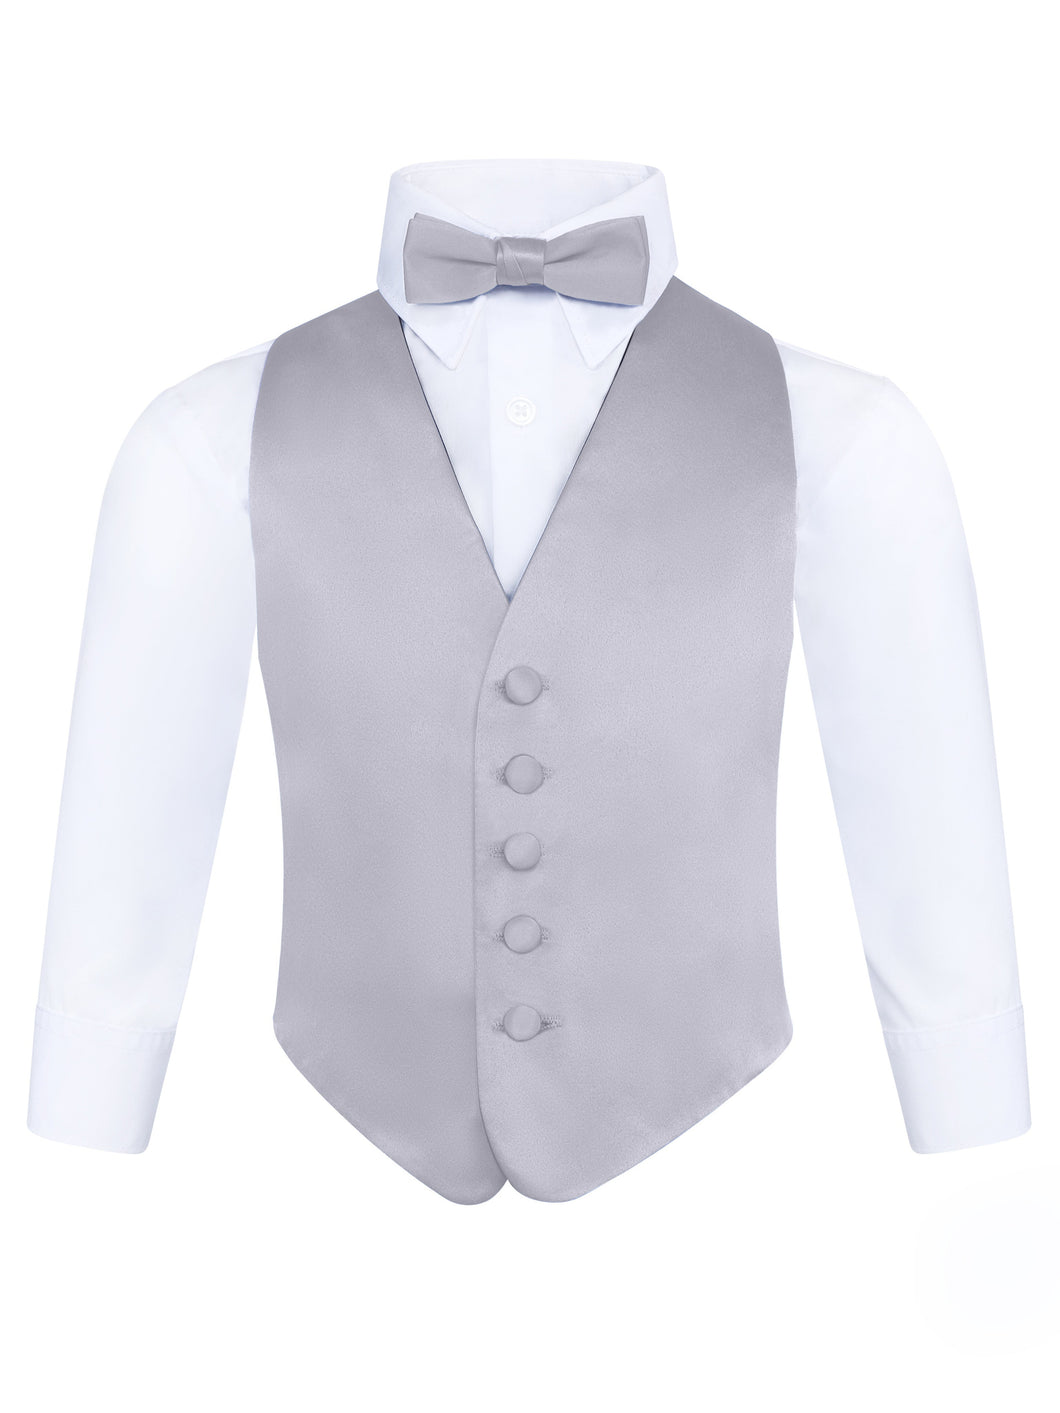 S.H. Churchill & Co. Boy's 3 Piece Silver Backless Formal Vest Set - Includes Vest, Bow Tie, Pocket Square for Tuxedo or Suit